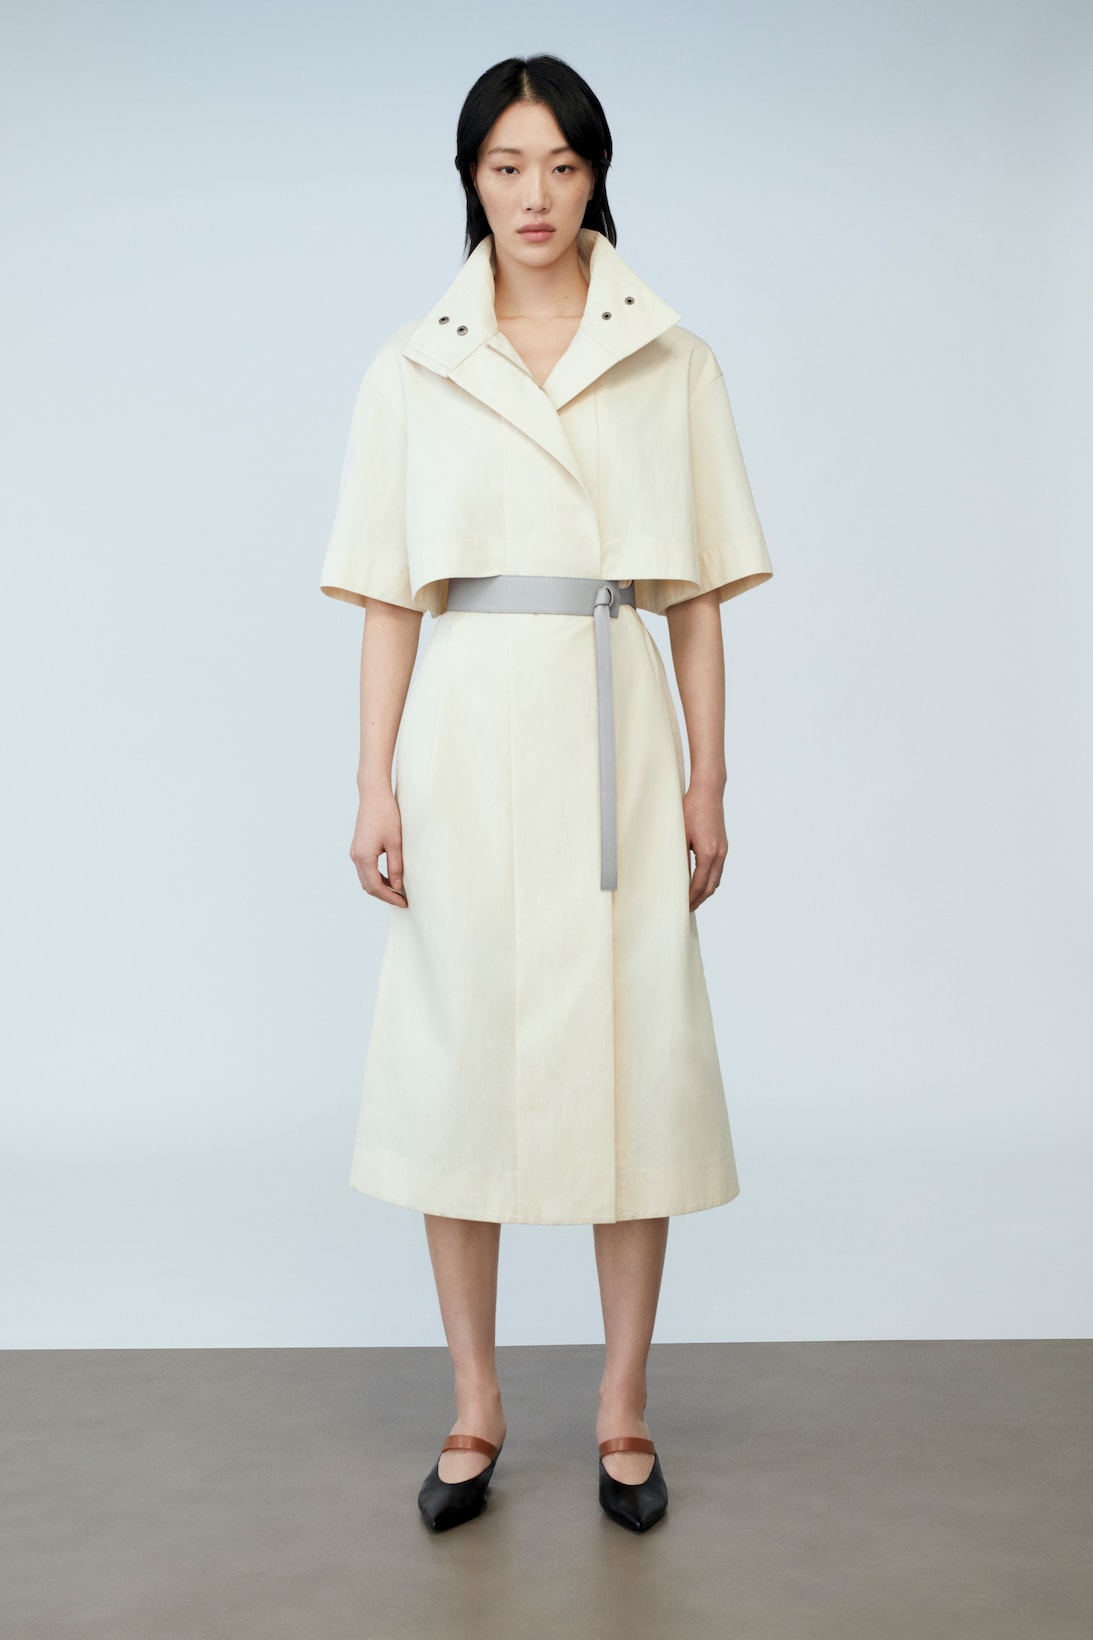 sora choi cos spring womenswear summer collection lookbook white shirt jacket skirt dress belt black shoes sandals